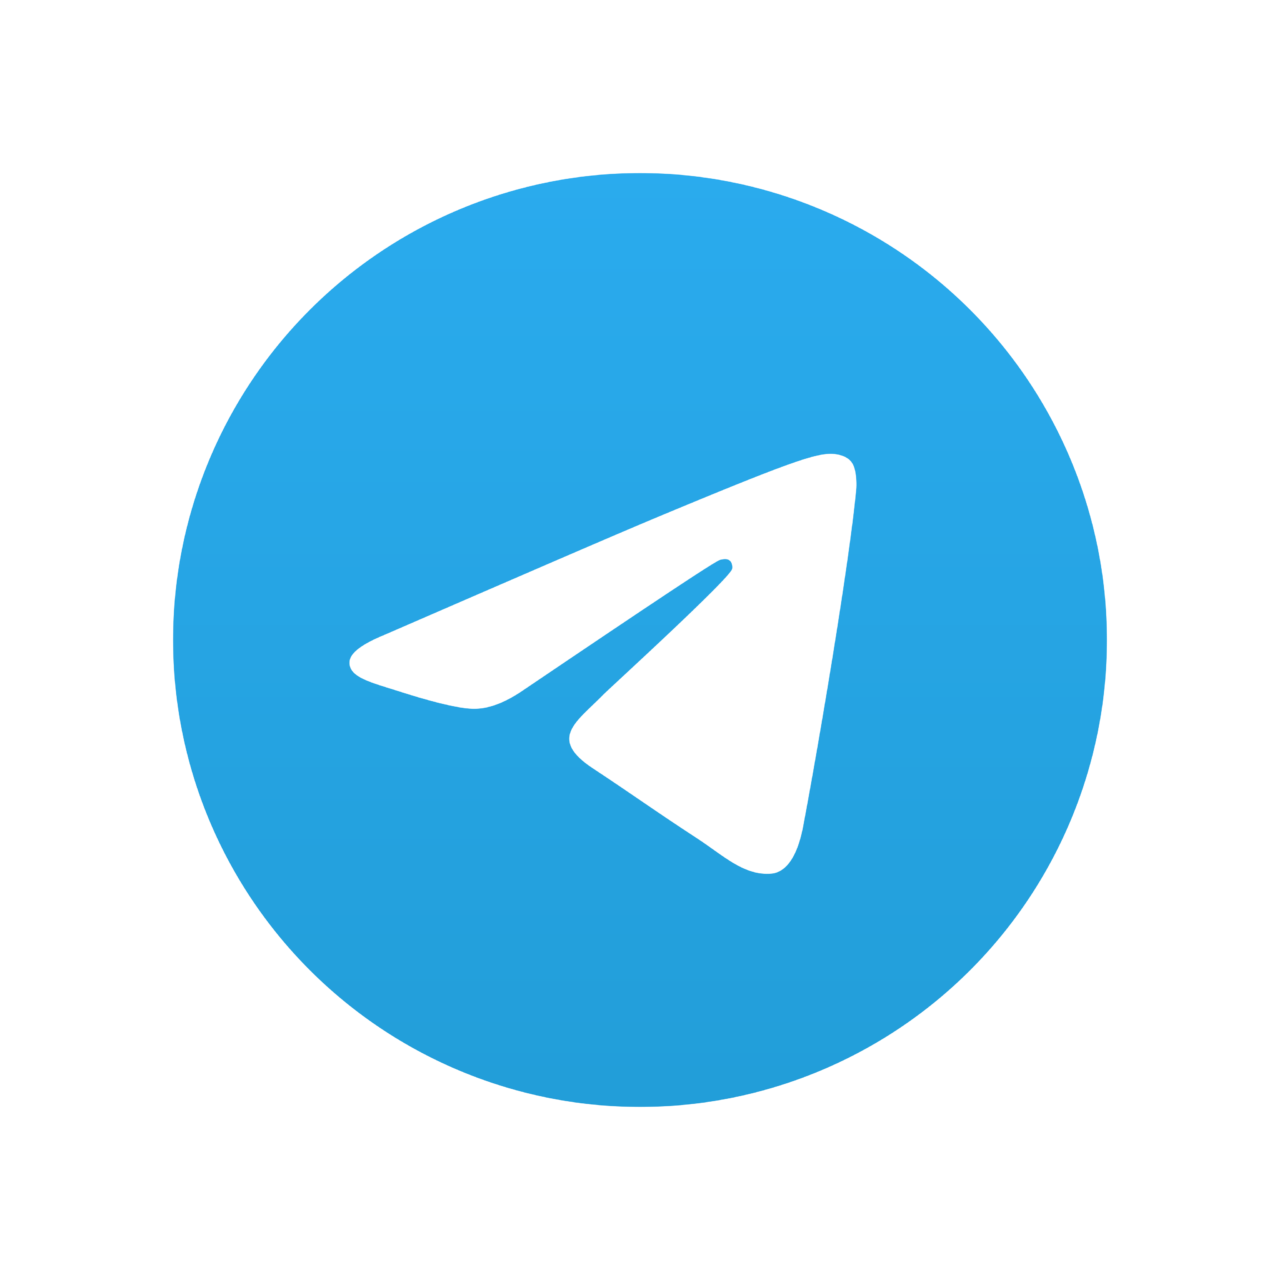 Logotipo do telegrama